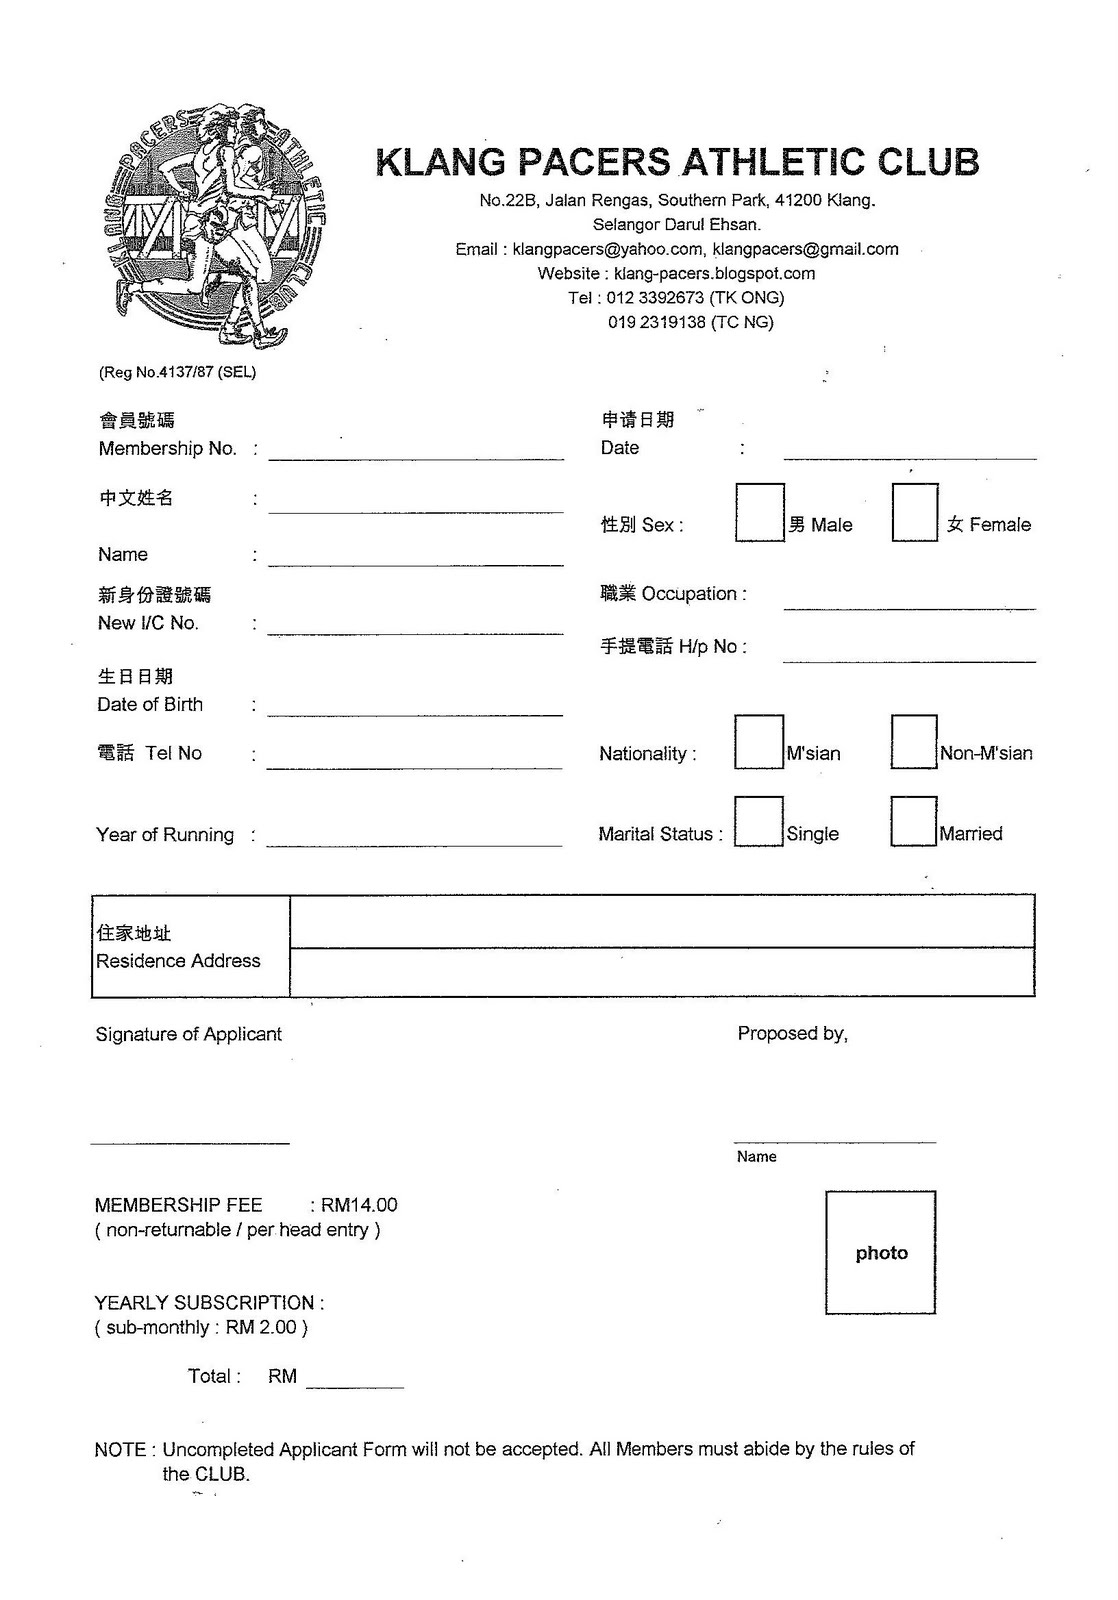 Club Application Form Template 03 sept 2010 membership form